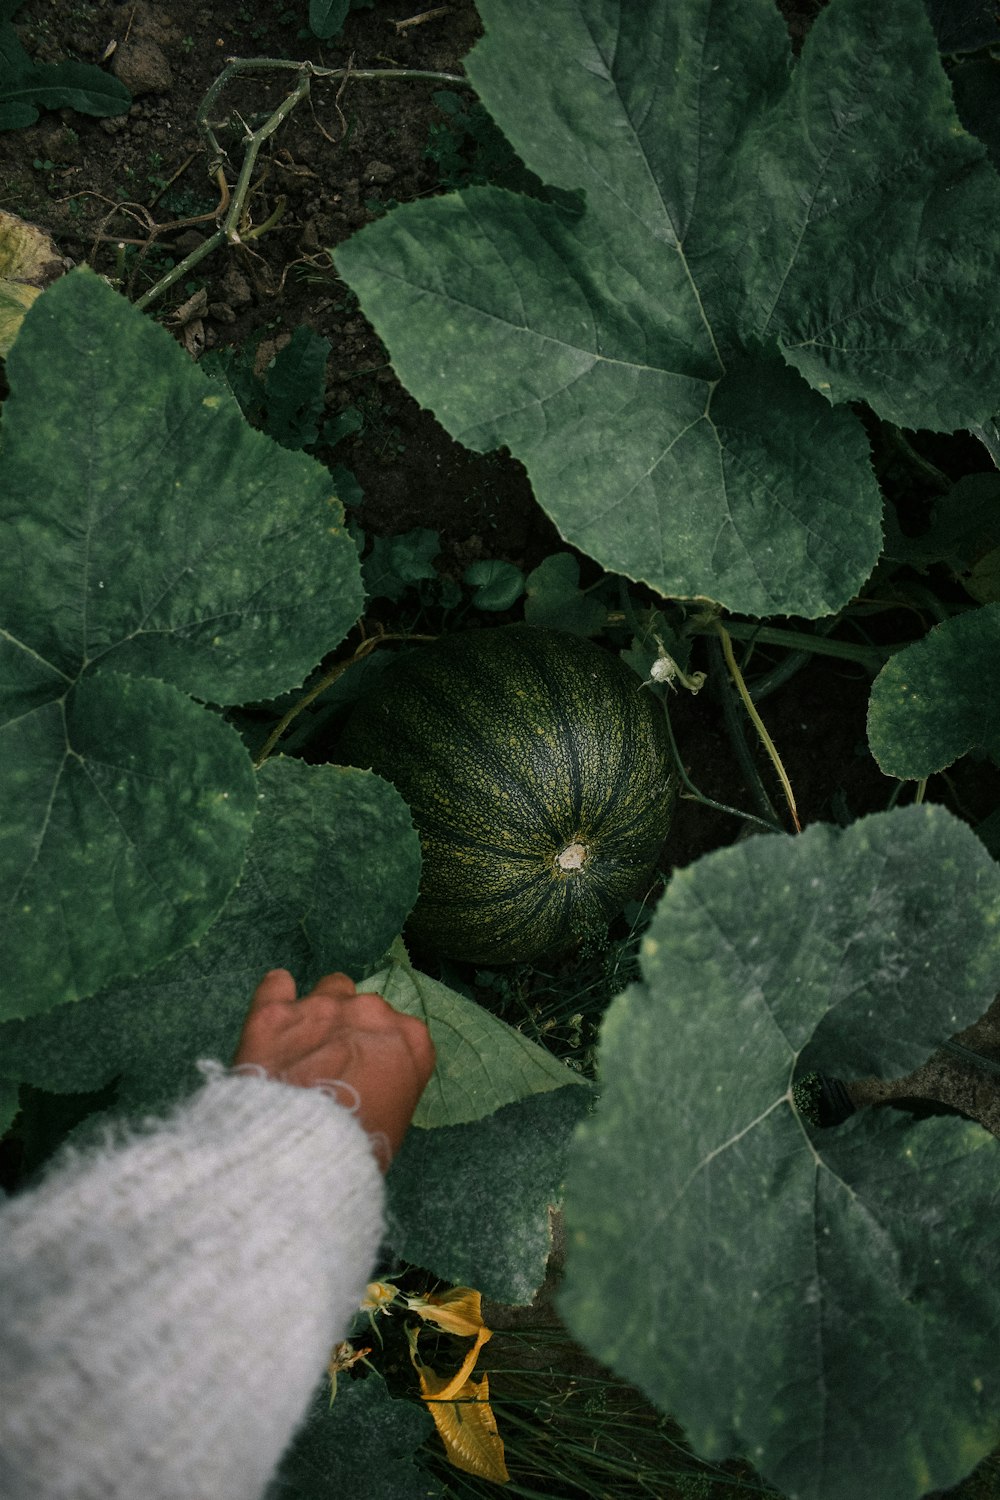 a hand reaching for a green pumpkin on a plant